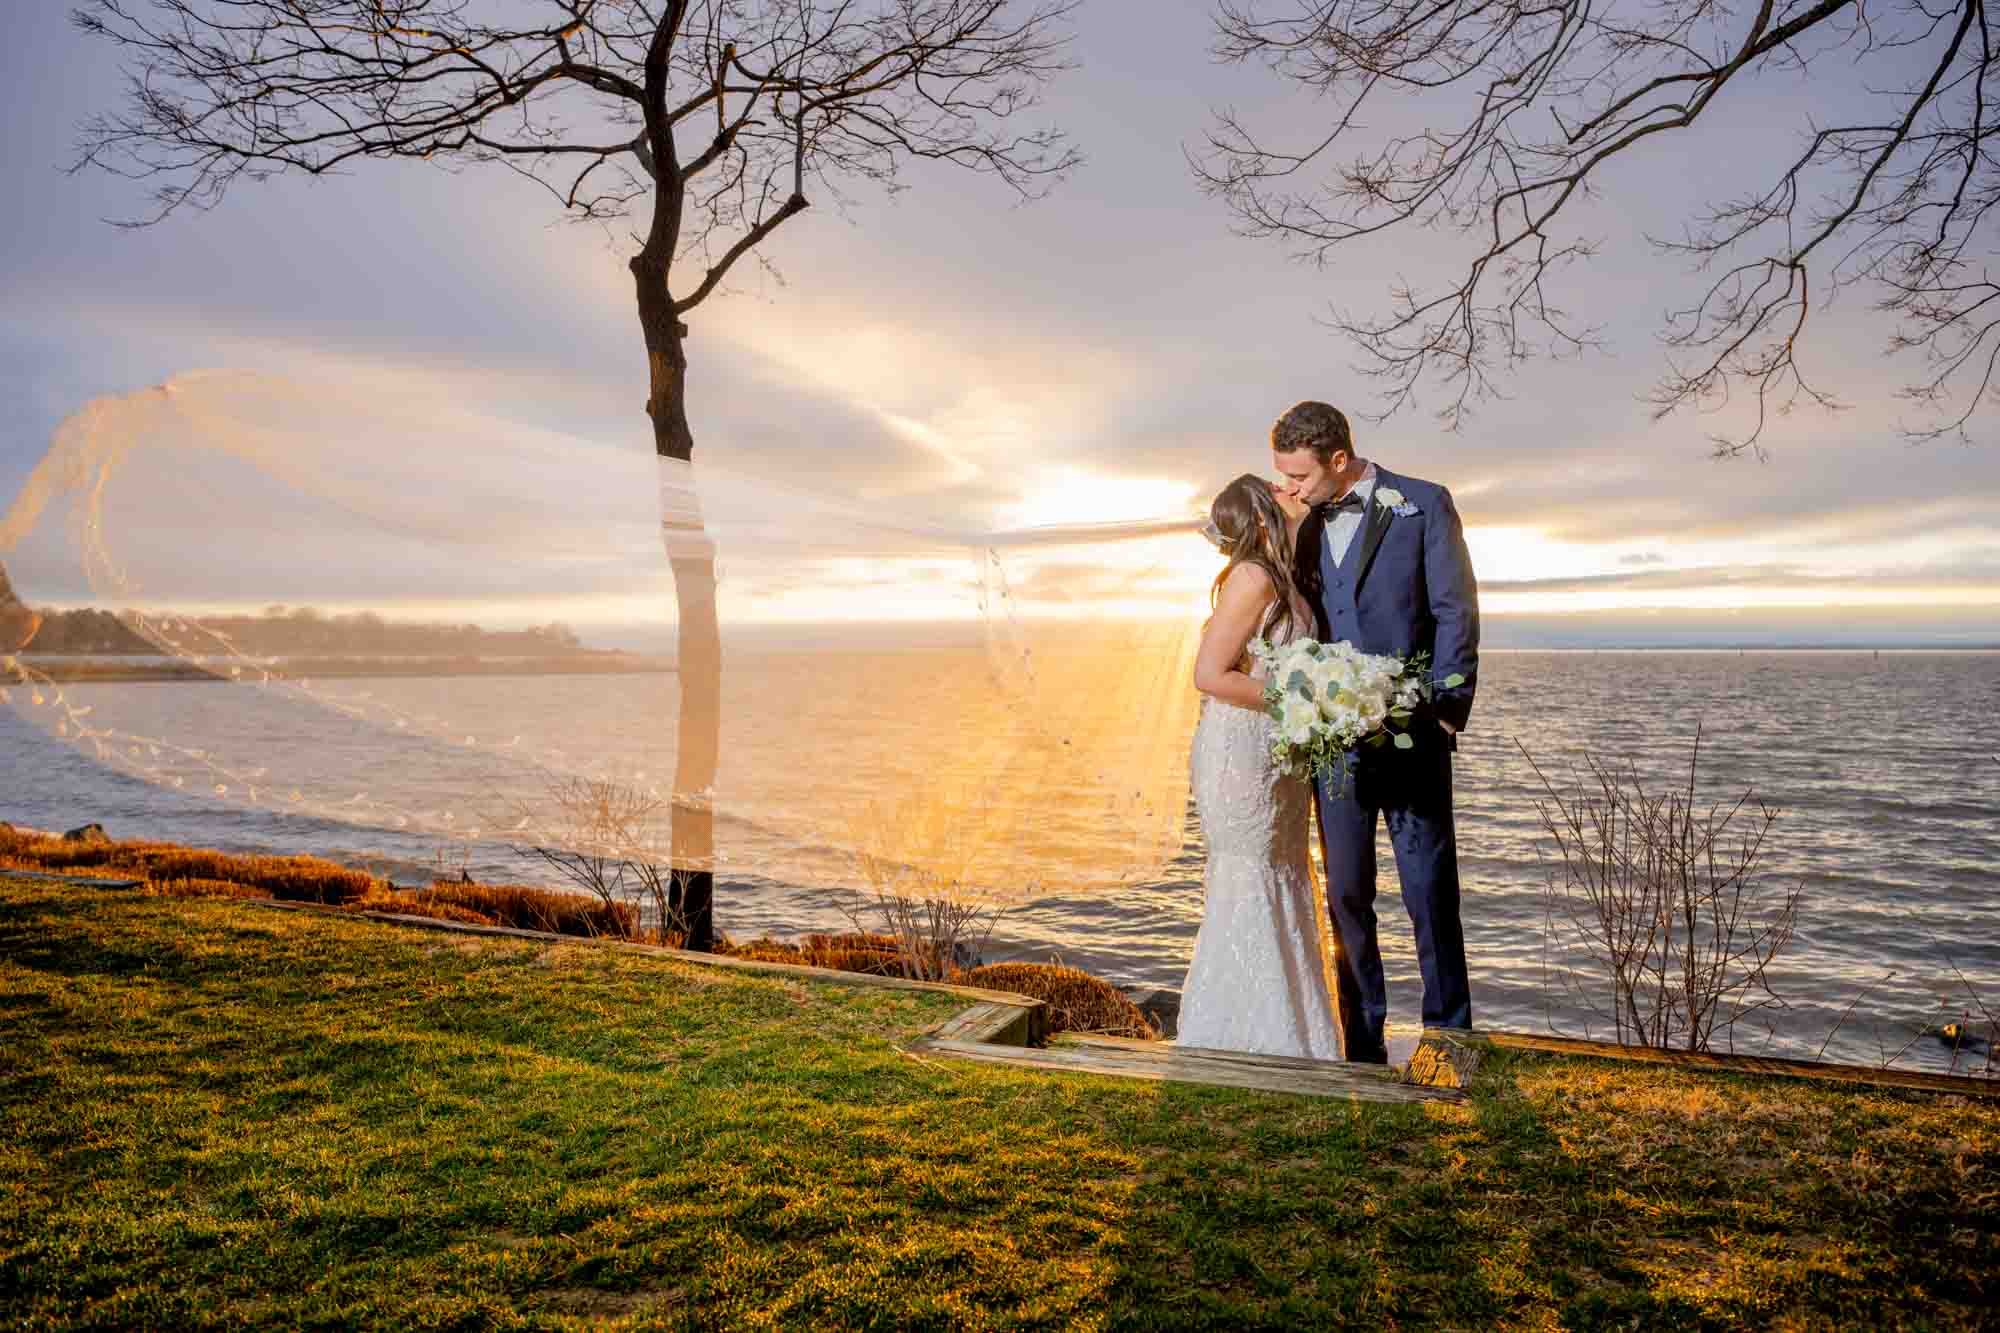 Chesapeake-Bay-Beach-Club-bride-groom-sunset.jpg